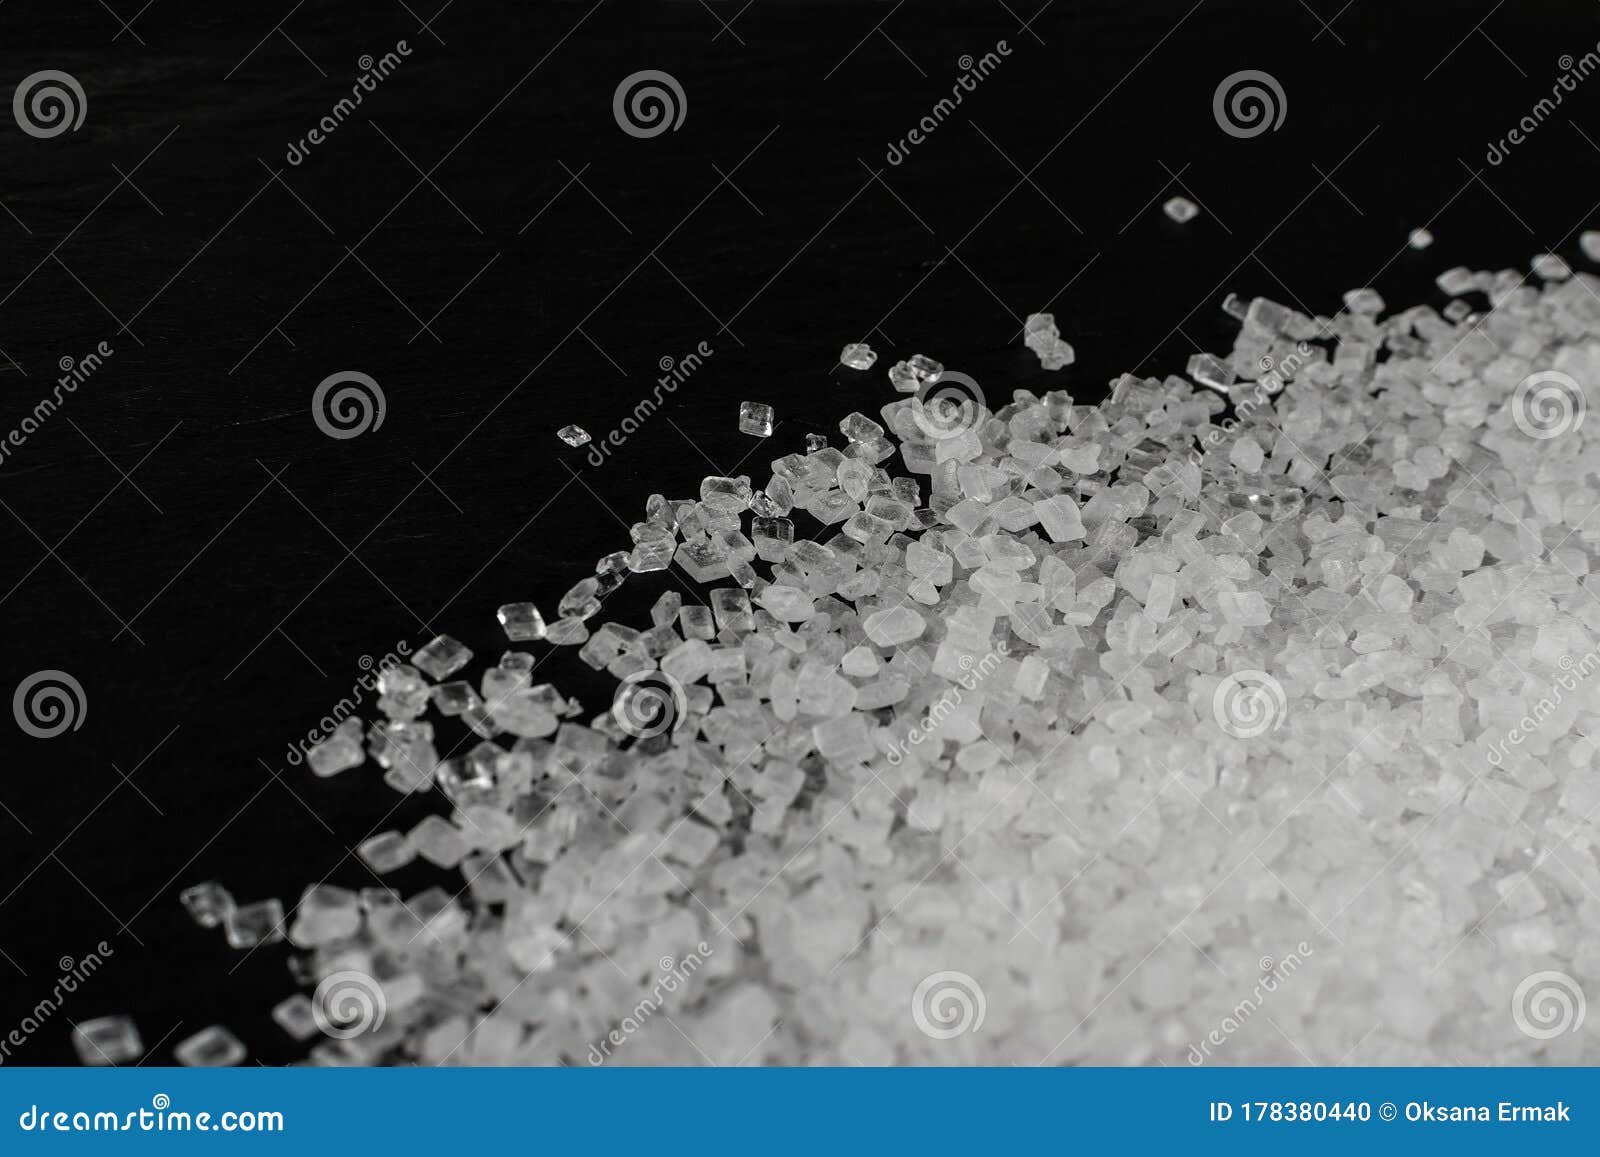 big sugar crystals or sucrose crystals on black background